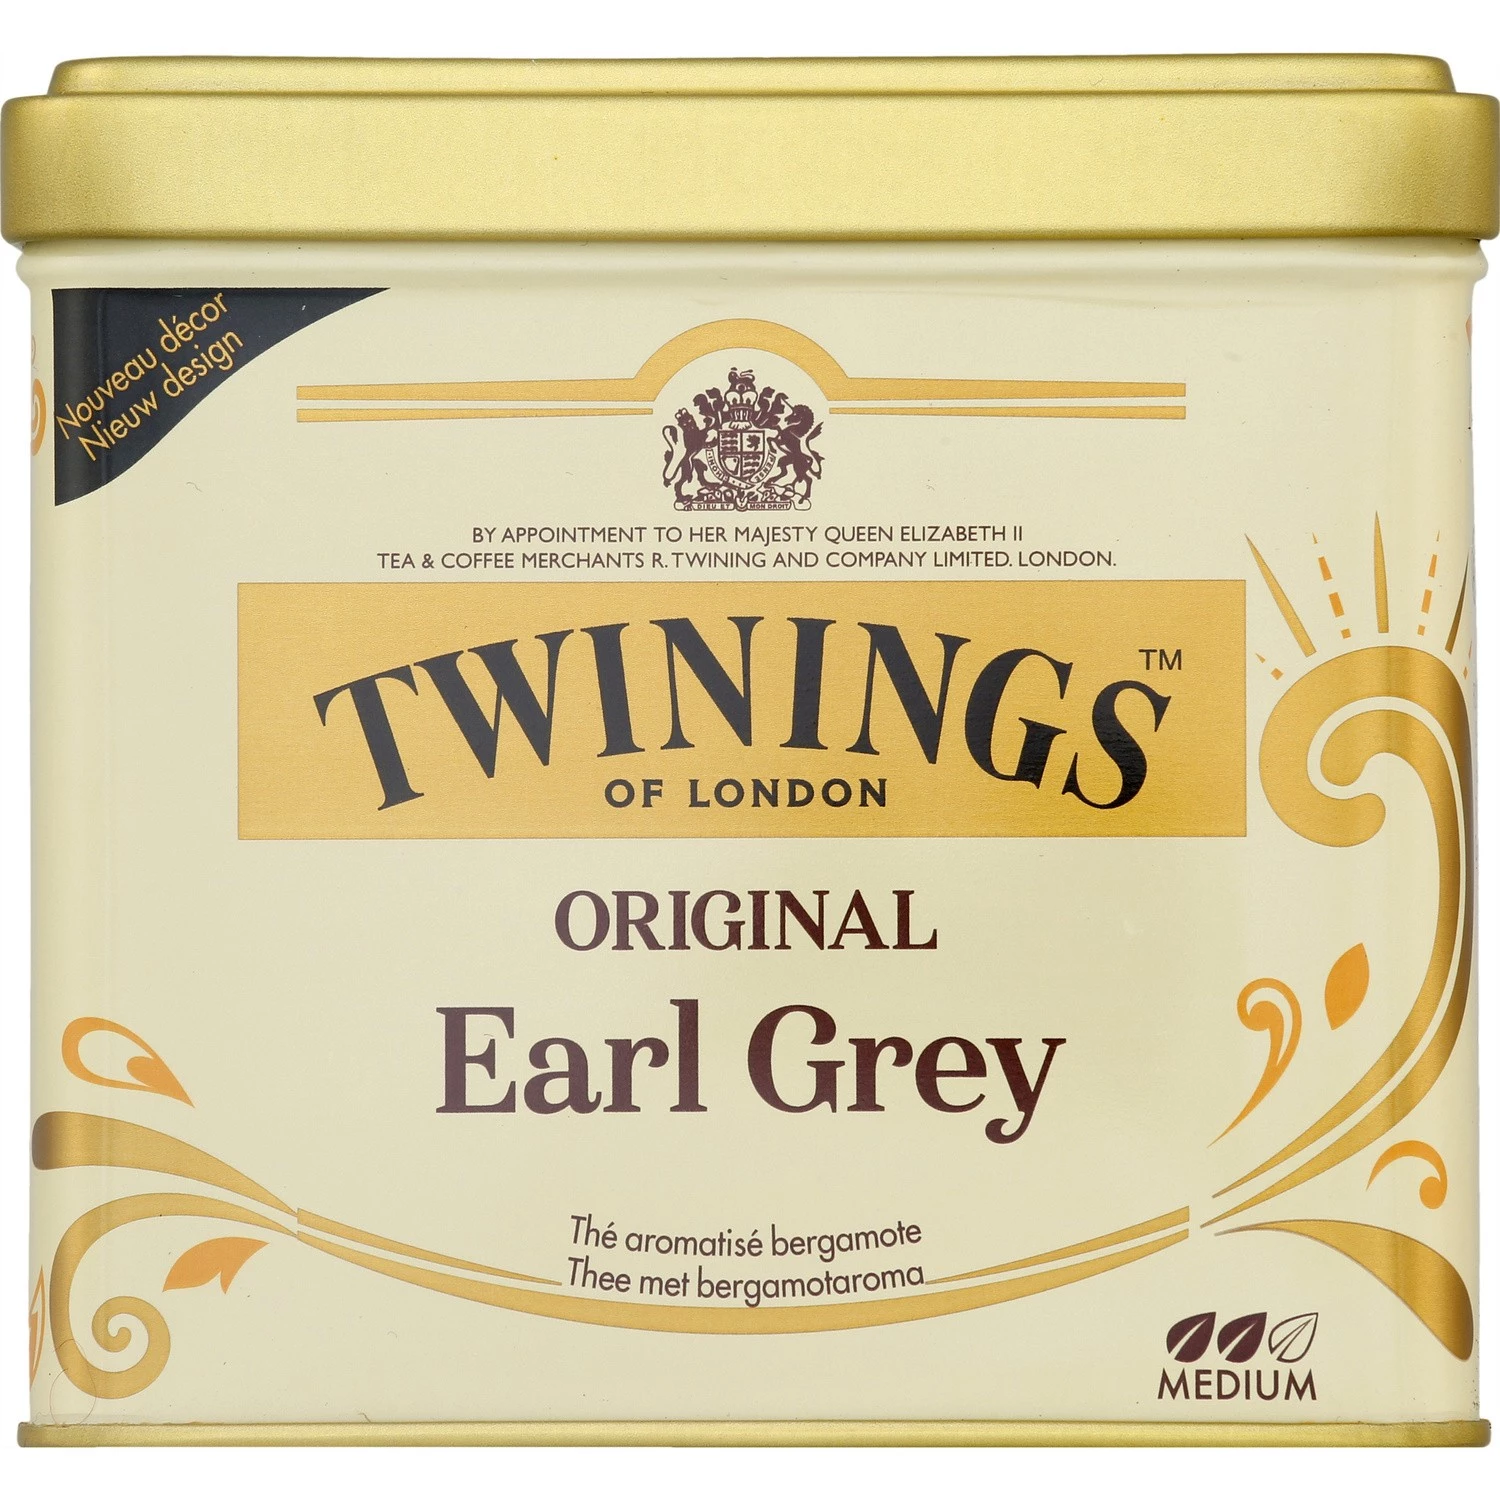 Original Earl Gray bergamot flavored tea 200g - TWININGS